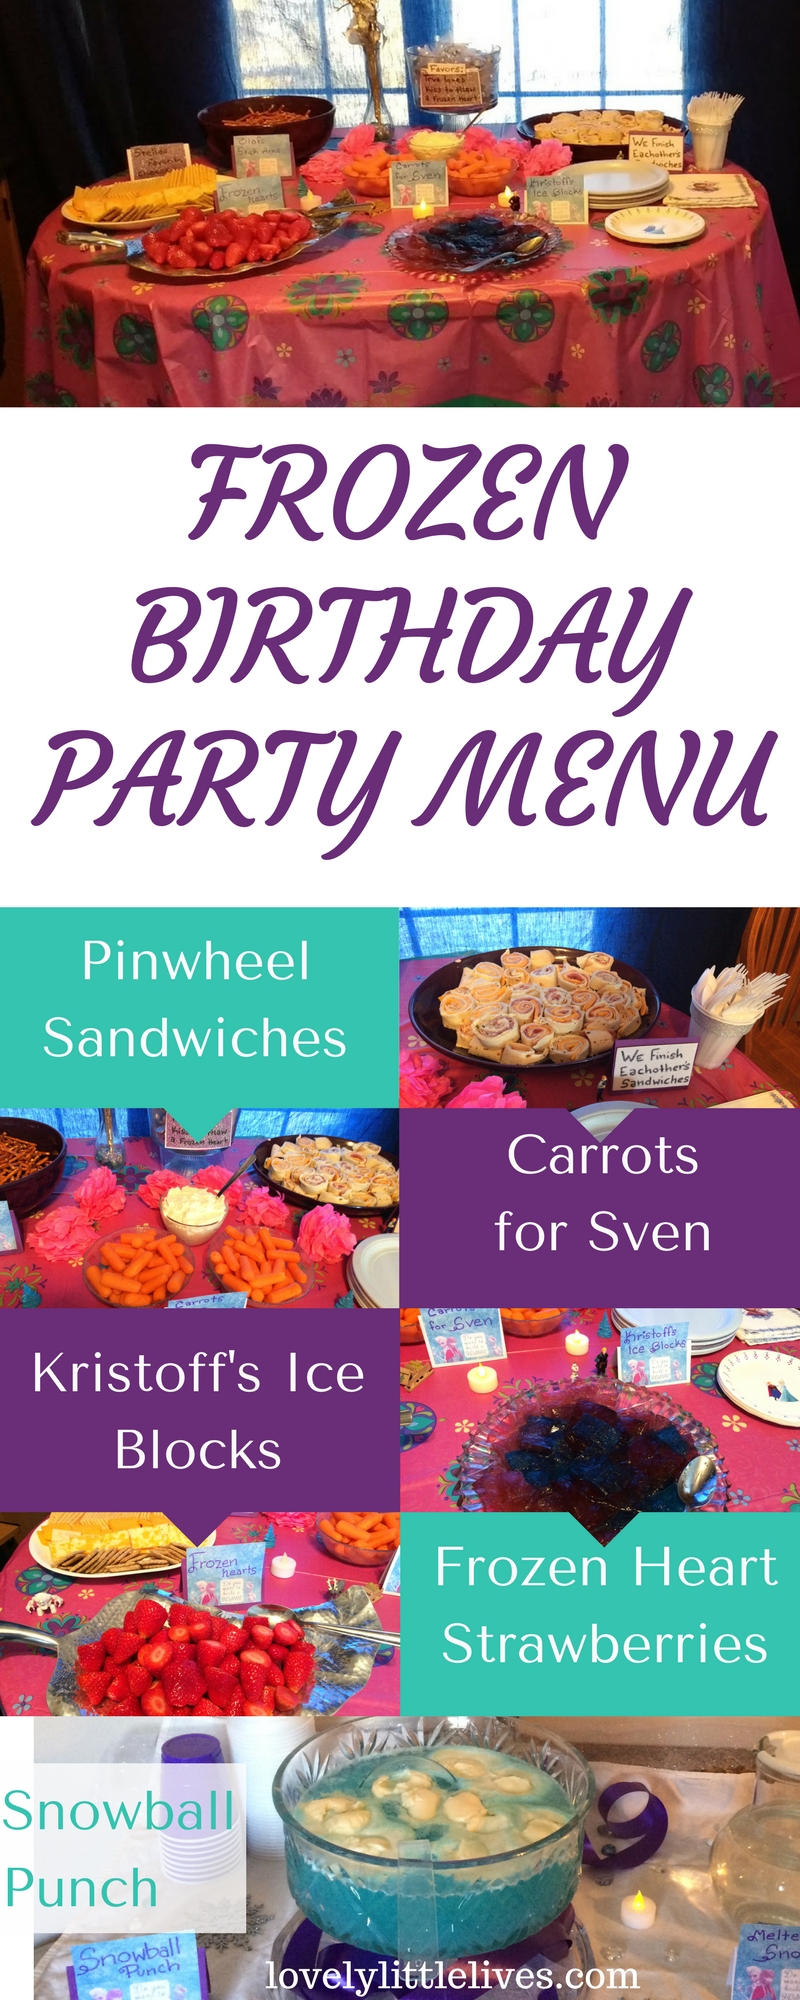 frozen birthday party menu